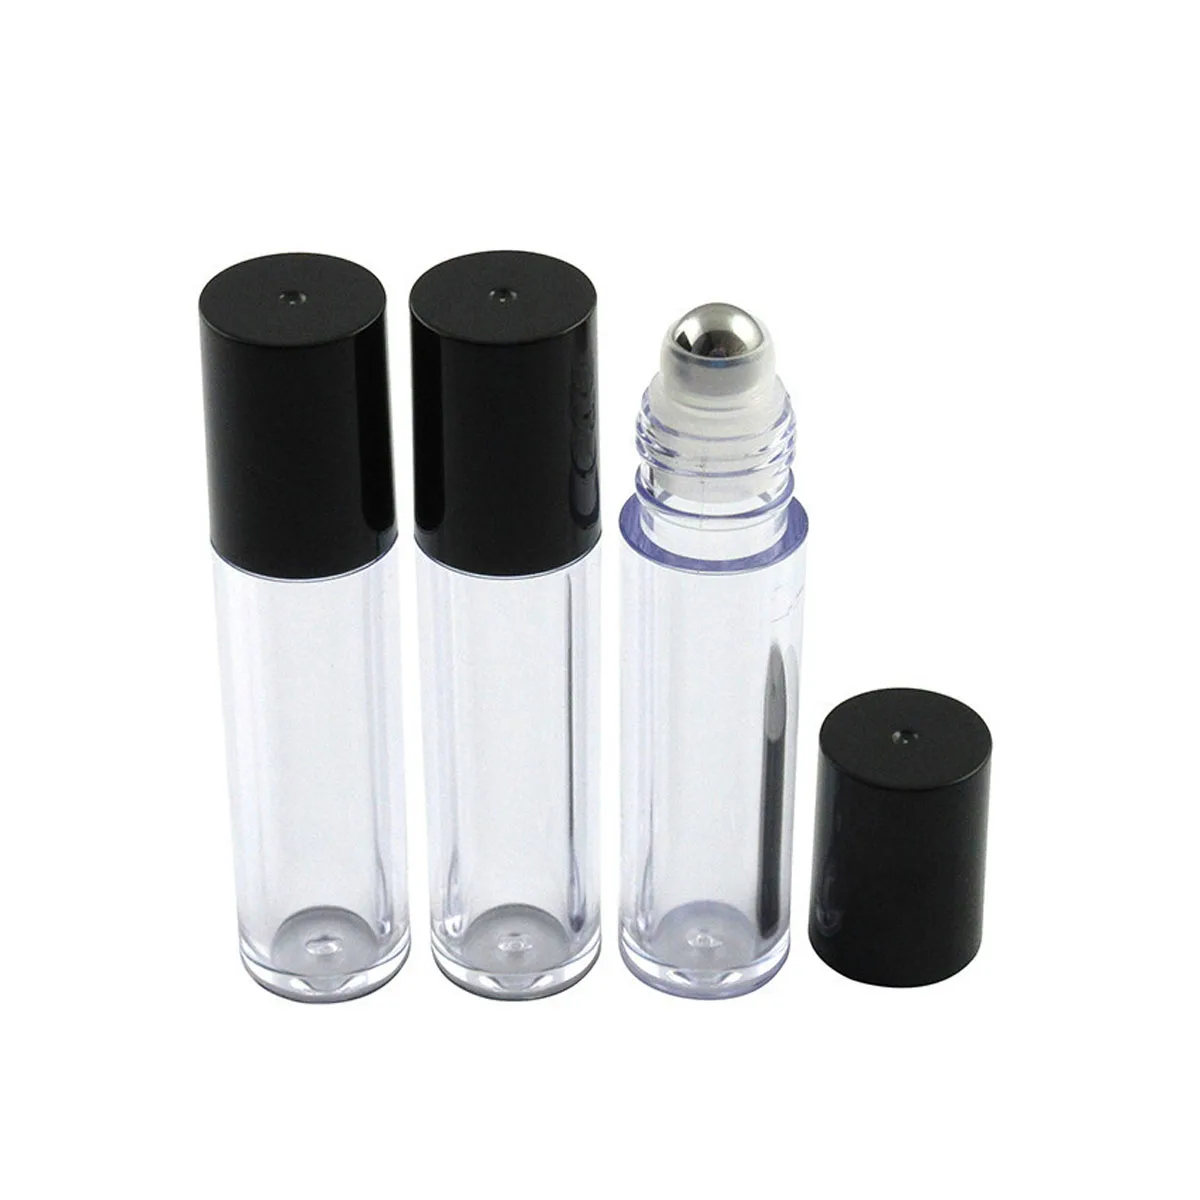 

200pcs 7.5ml Essential Oil Roller Bottles, Roll on bottle with Stainless Steel Balls, Refillable Clear Perfume Sample Bottles